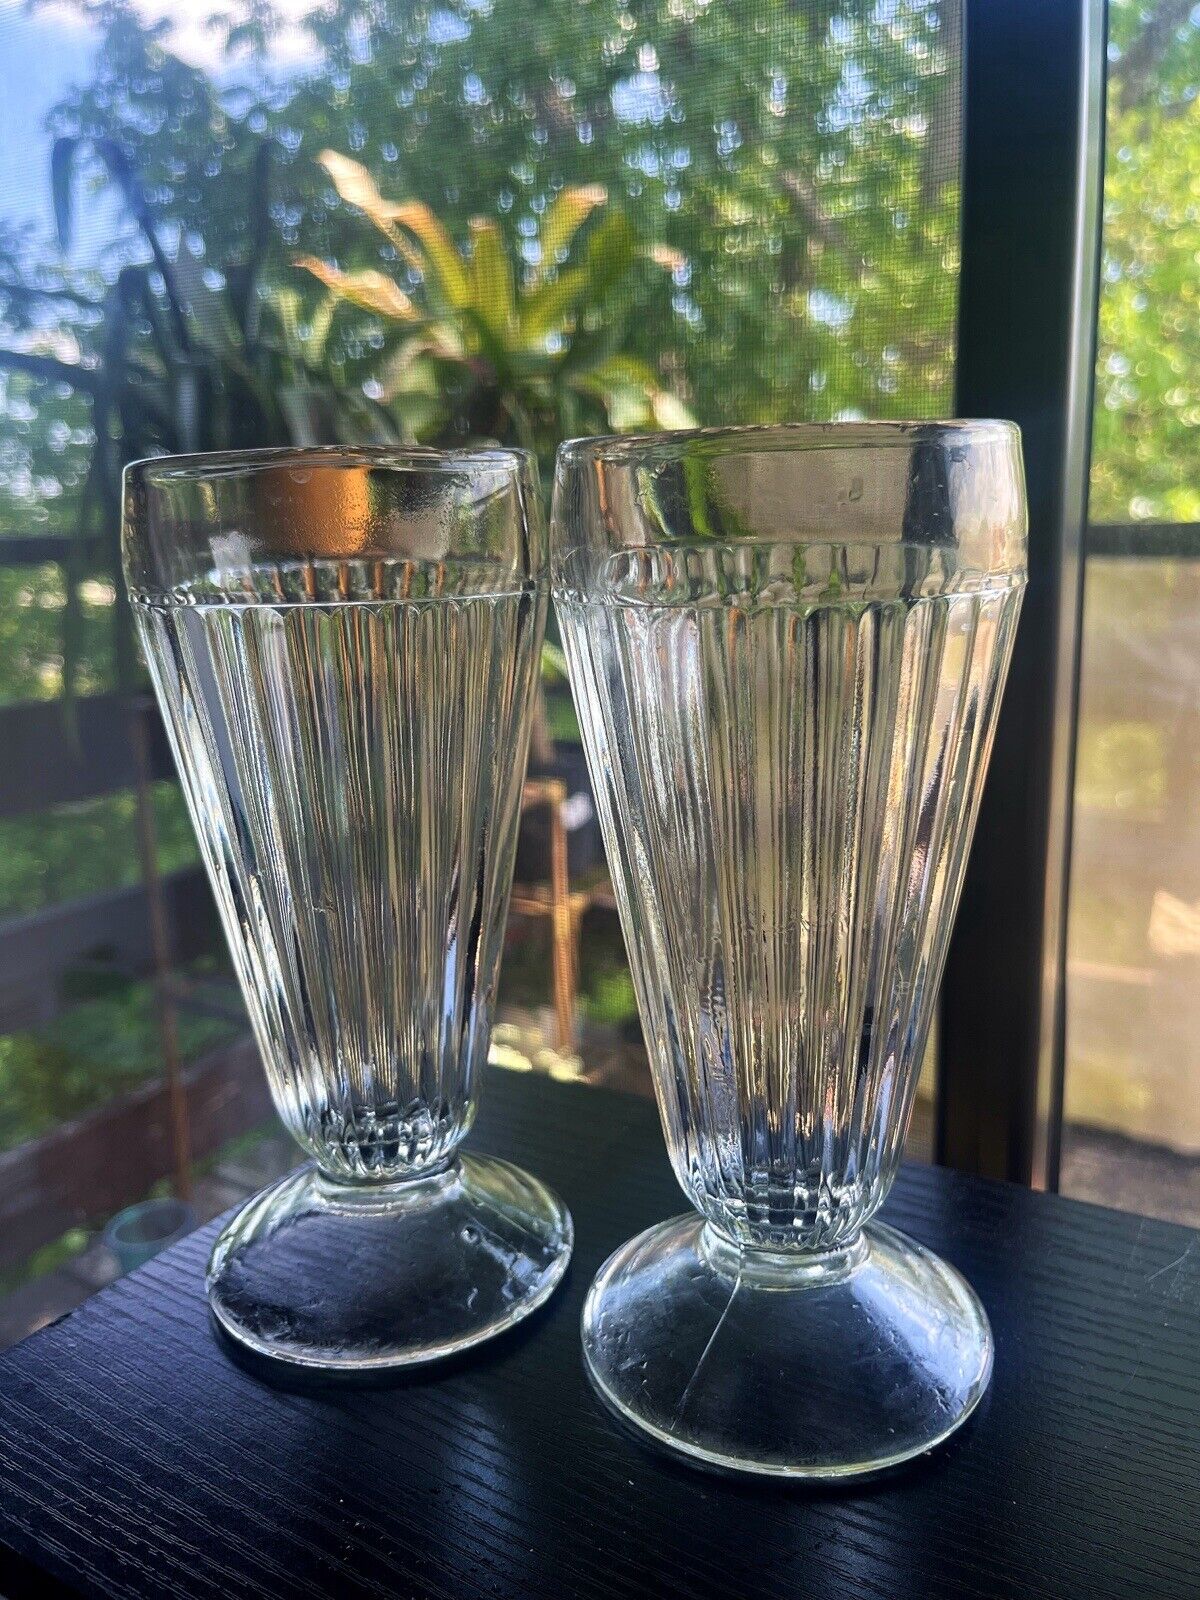 Vintage Glass Milkshake Cups - Set of 2 - Retro 1950s Diner Style